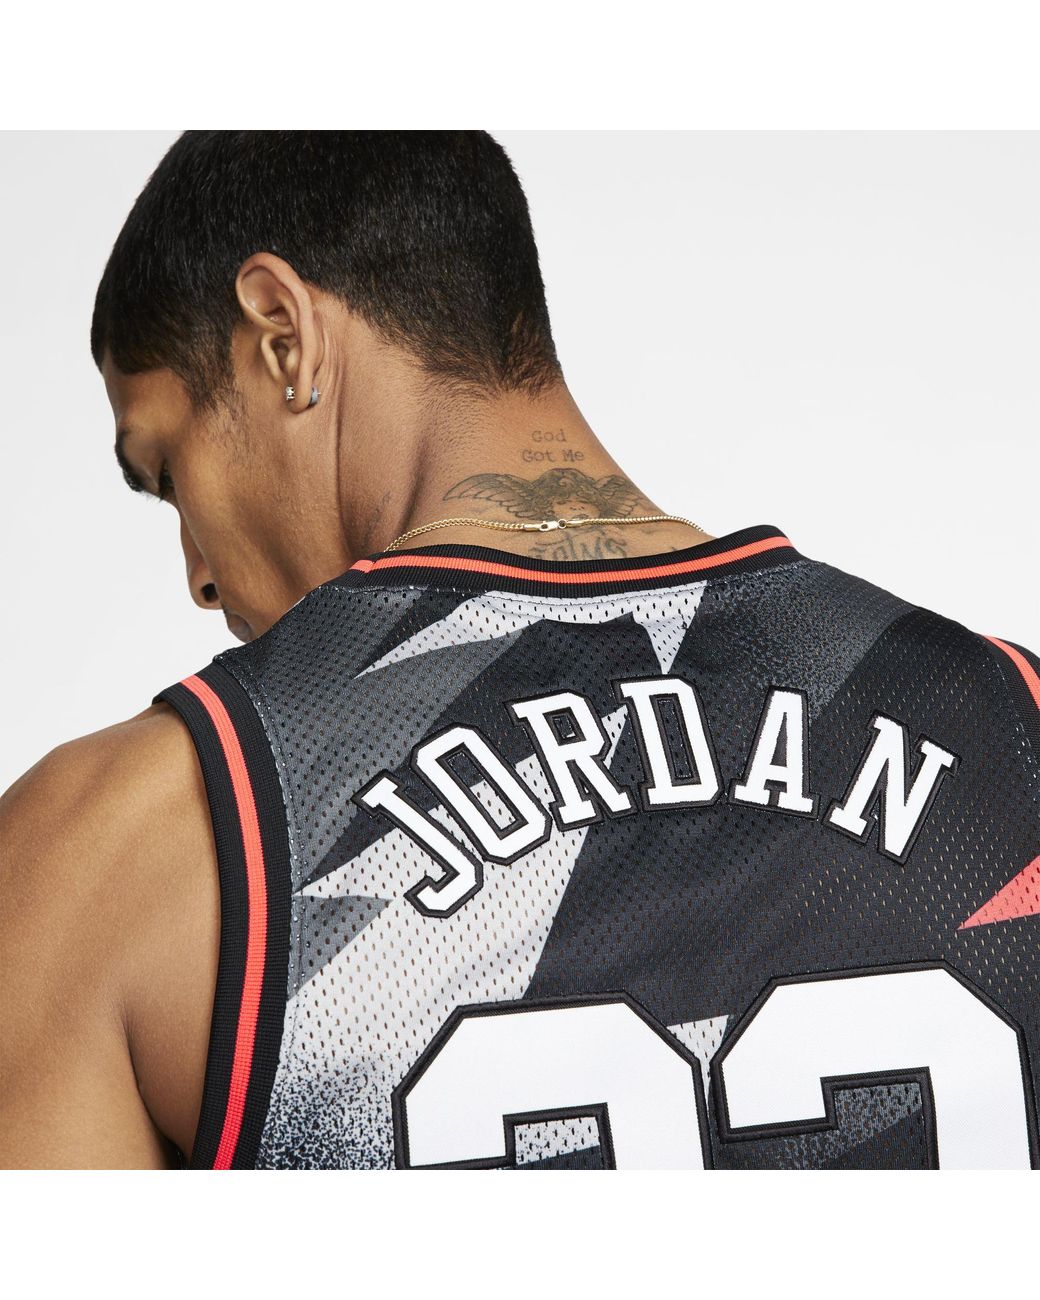 Jordan x Paris Saint-Germain Mesh Jersey / Black